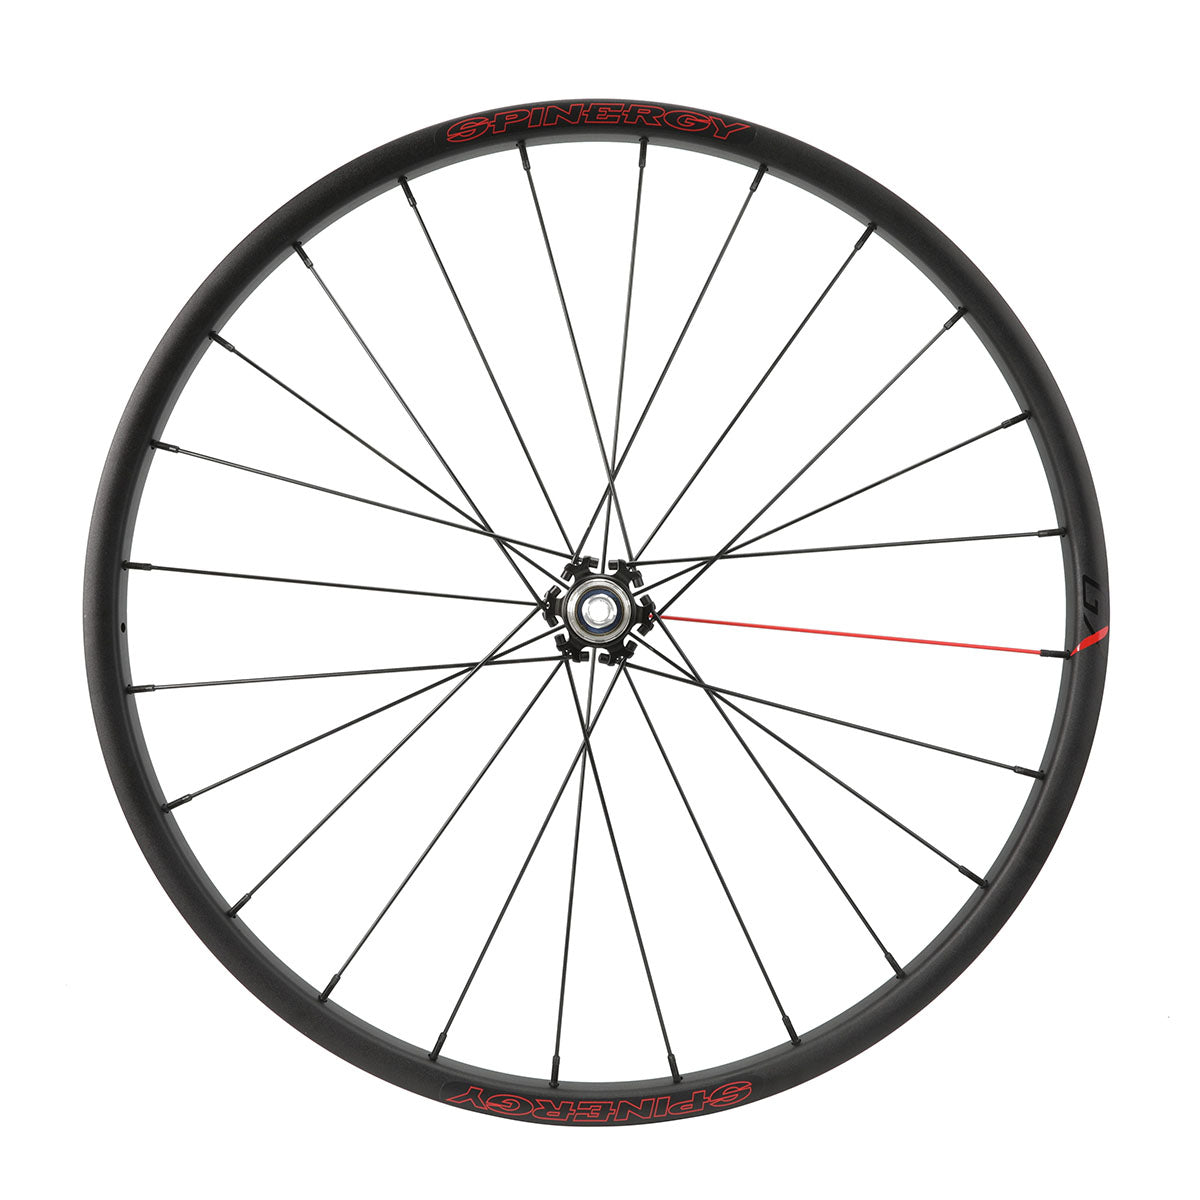 SPINERGY - GX 700c, 36-42mm, Alloy Centerlock Bicycle Wheel Set - Gravel/CX - 2021 w/ "44" Hub